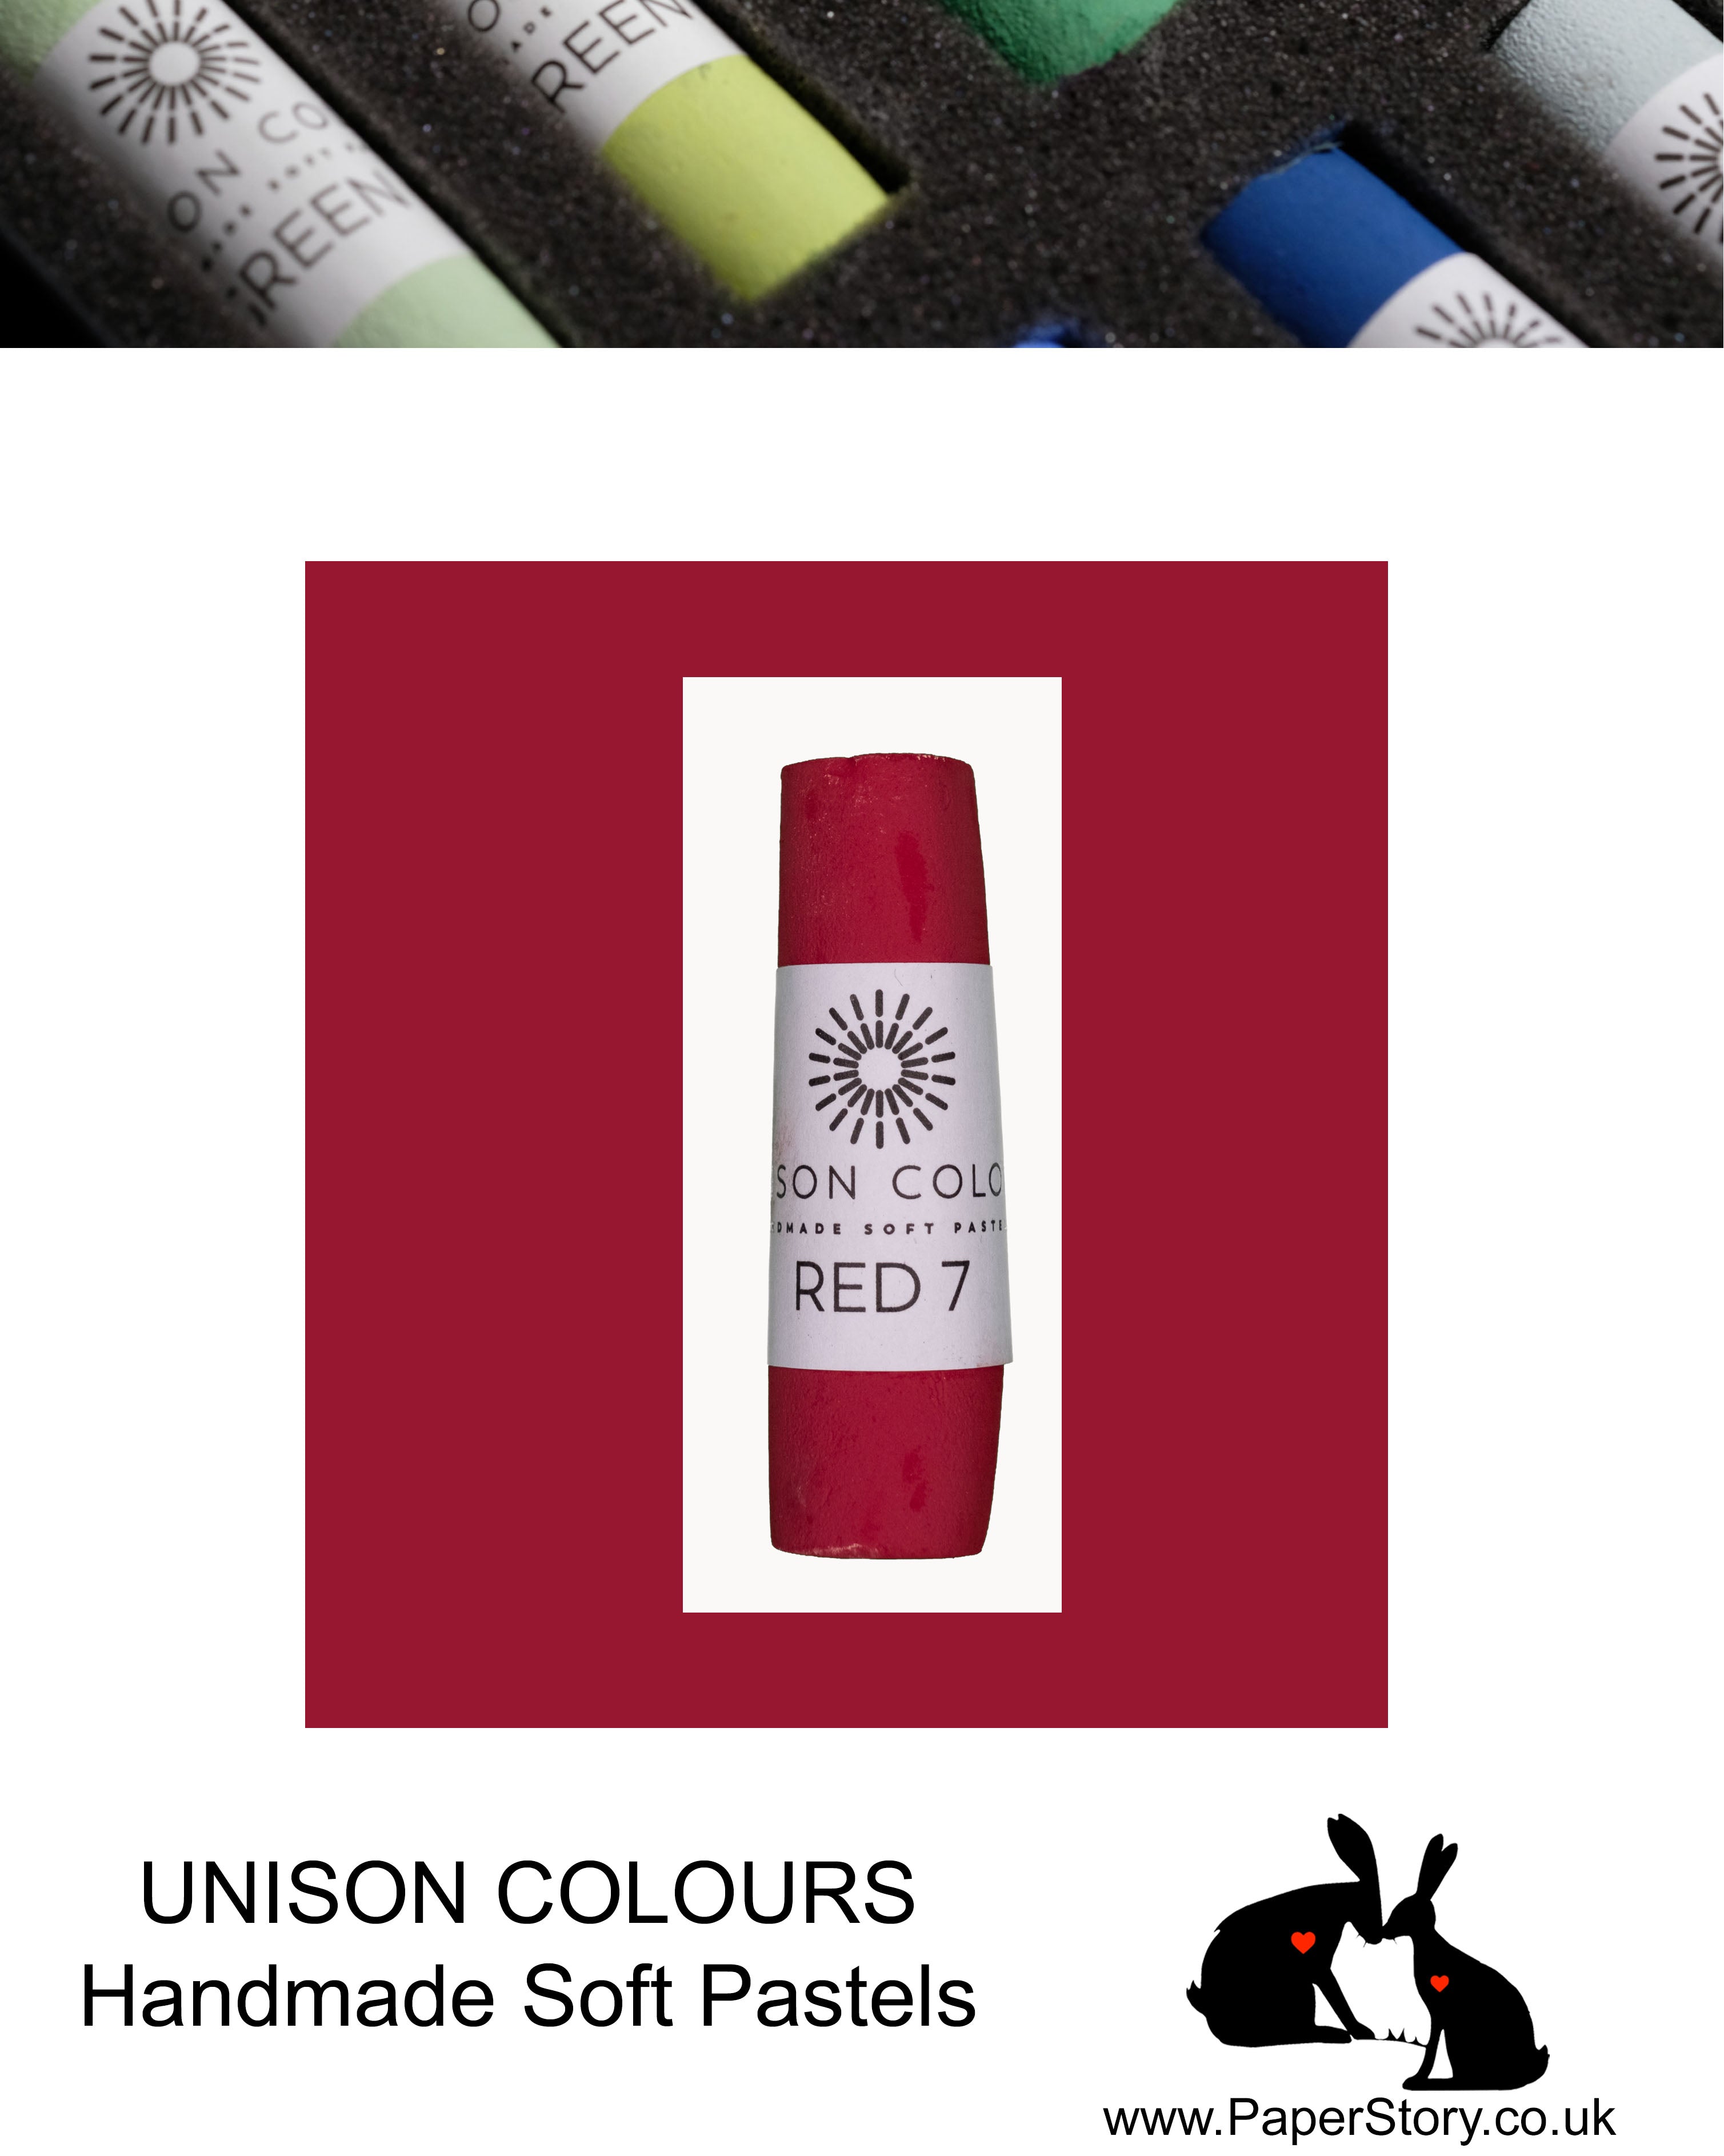 Unison Colour Handmade Soft Pastels Red 7 - Size Regular